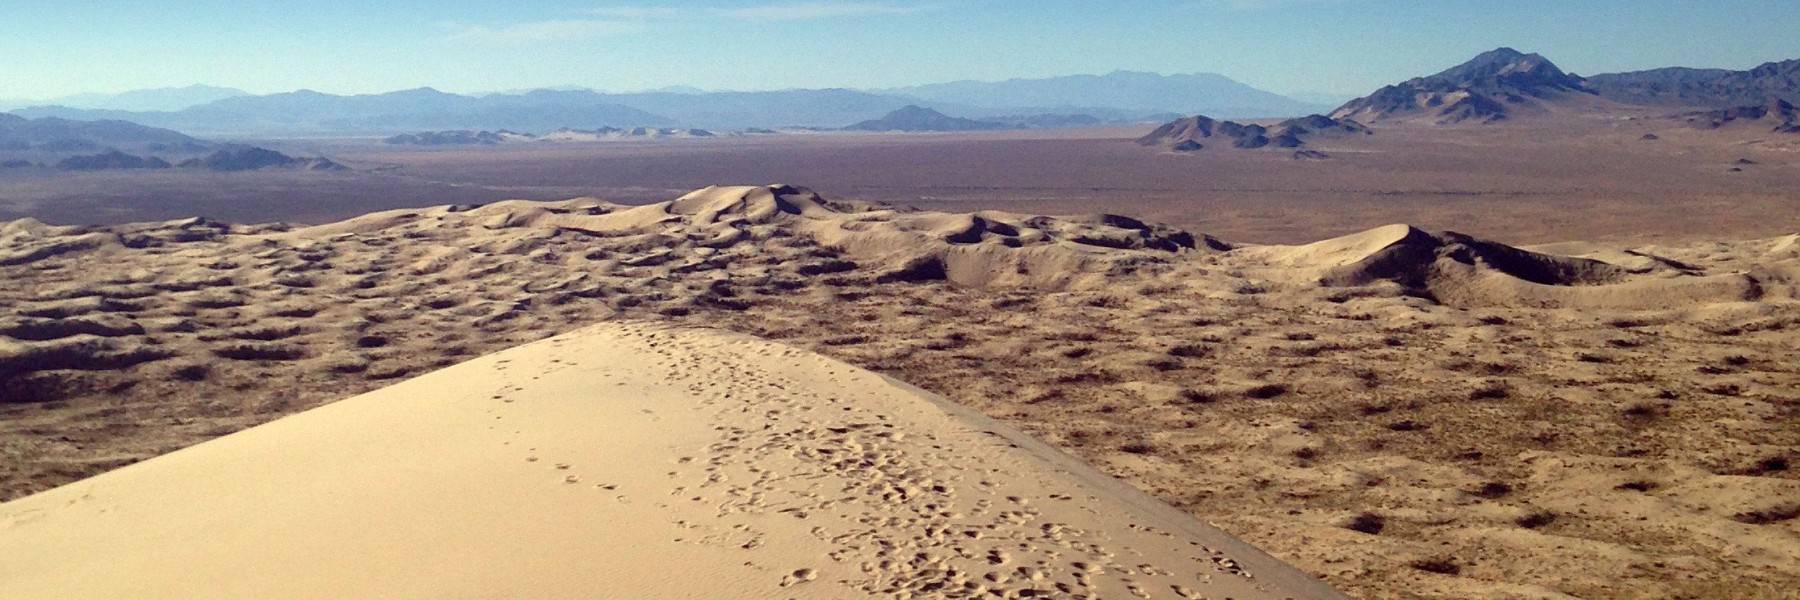 Mojave Desert. Credit: Heili Lowman